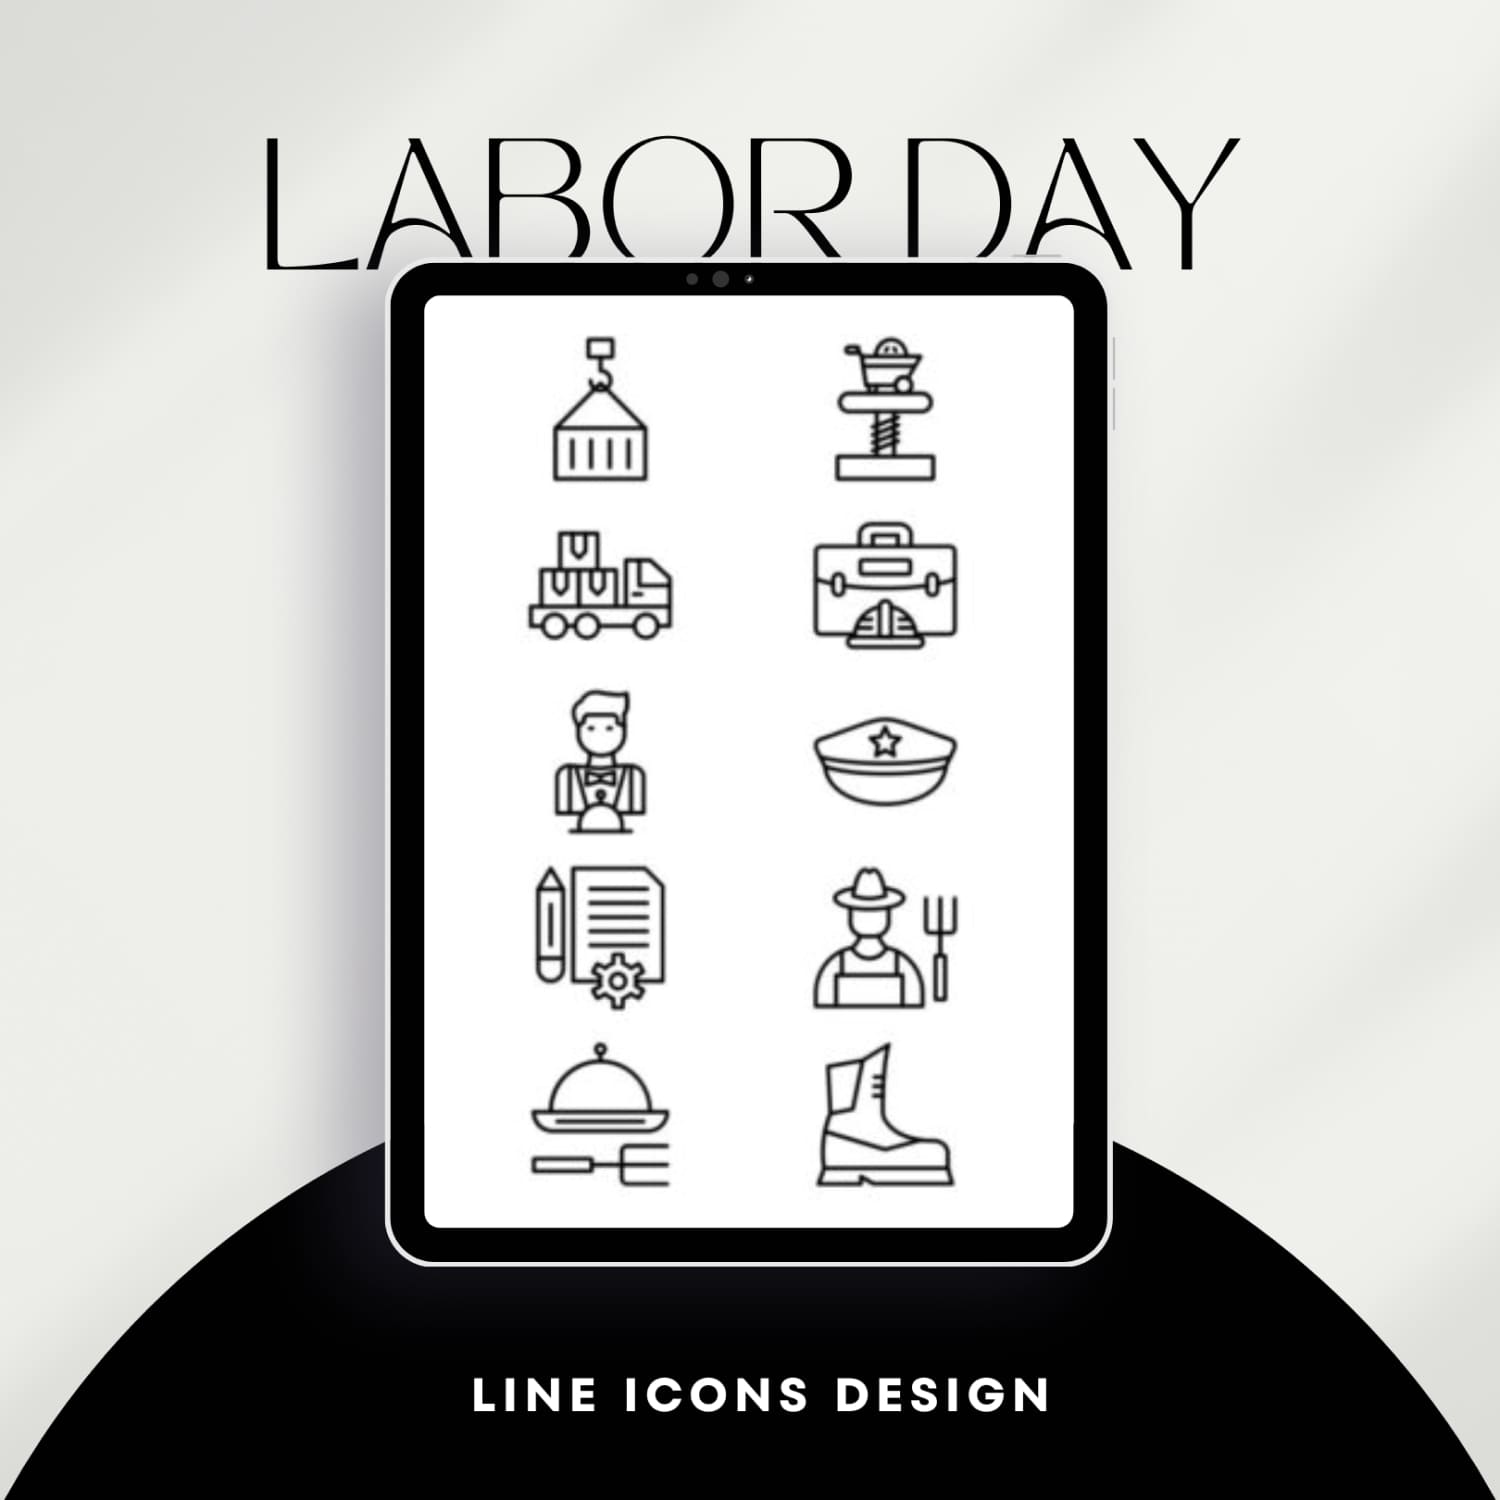 Labor Day Line Icons Design.